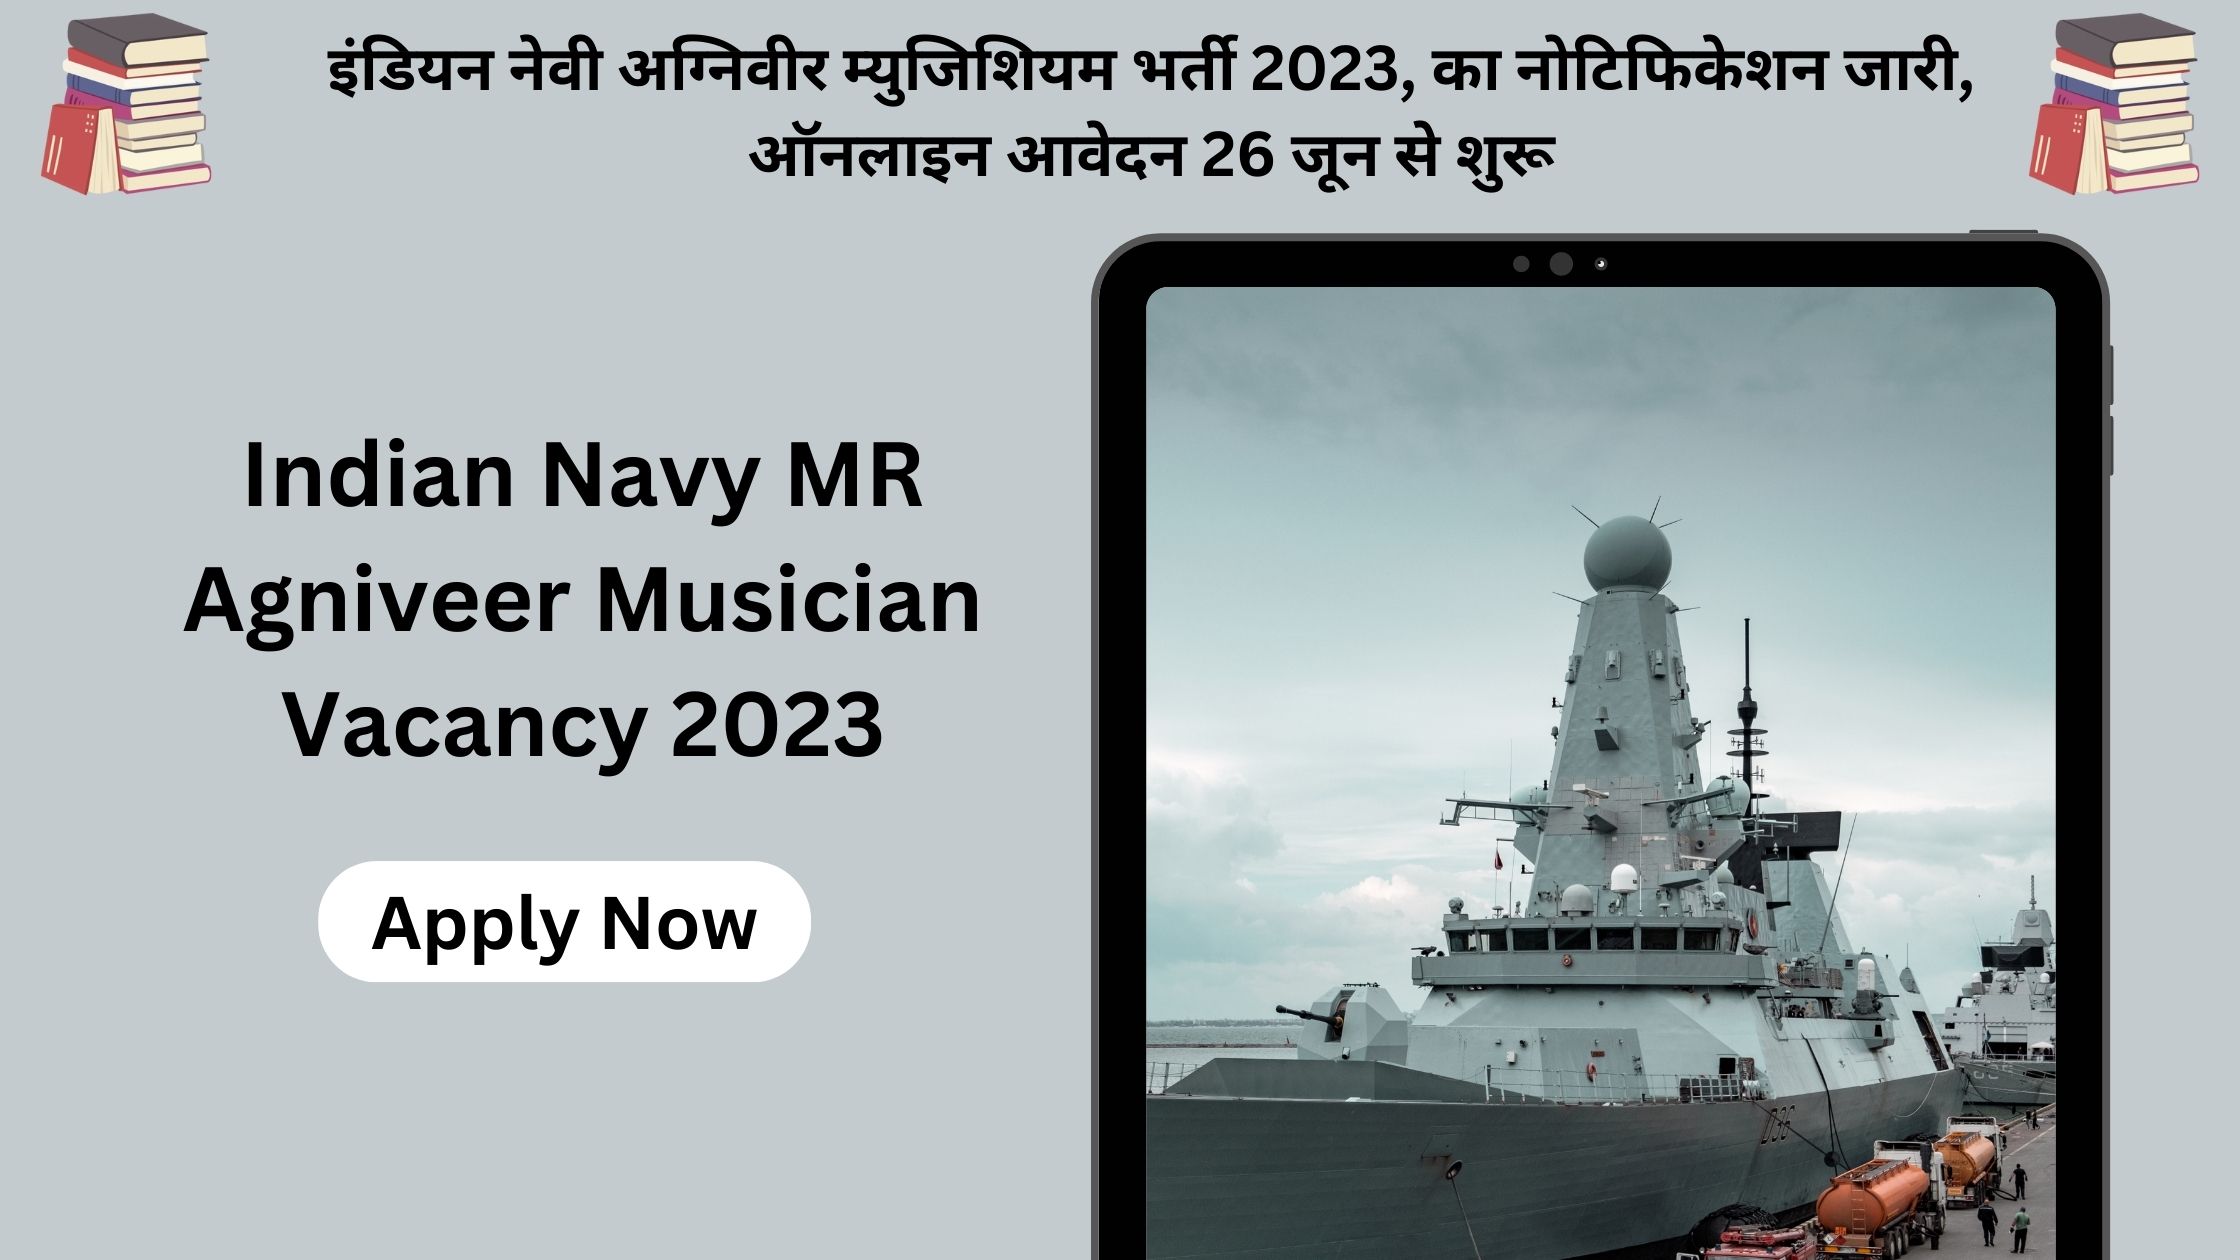 Indian Navy MR Agniveer Musician Vacancy 2023 Apply Now